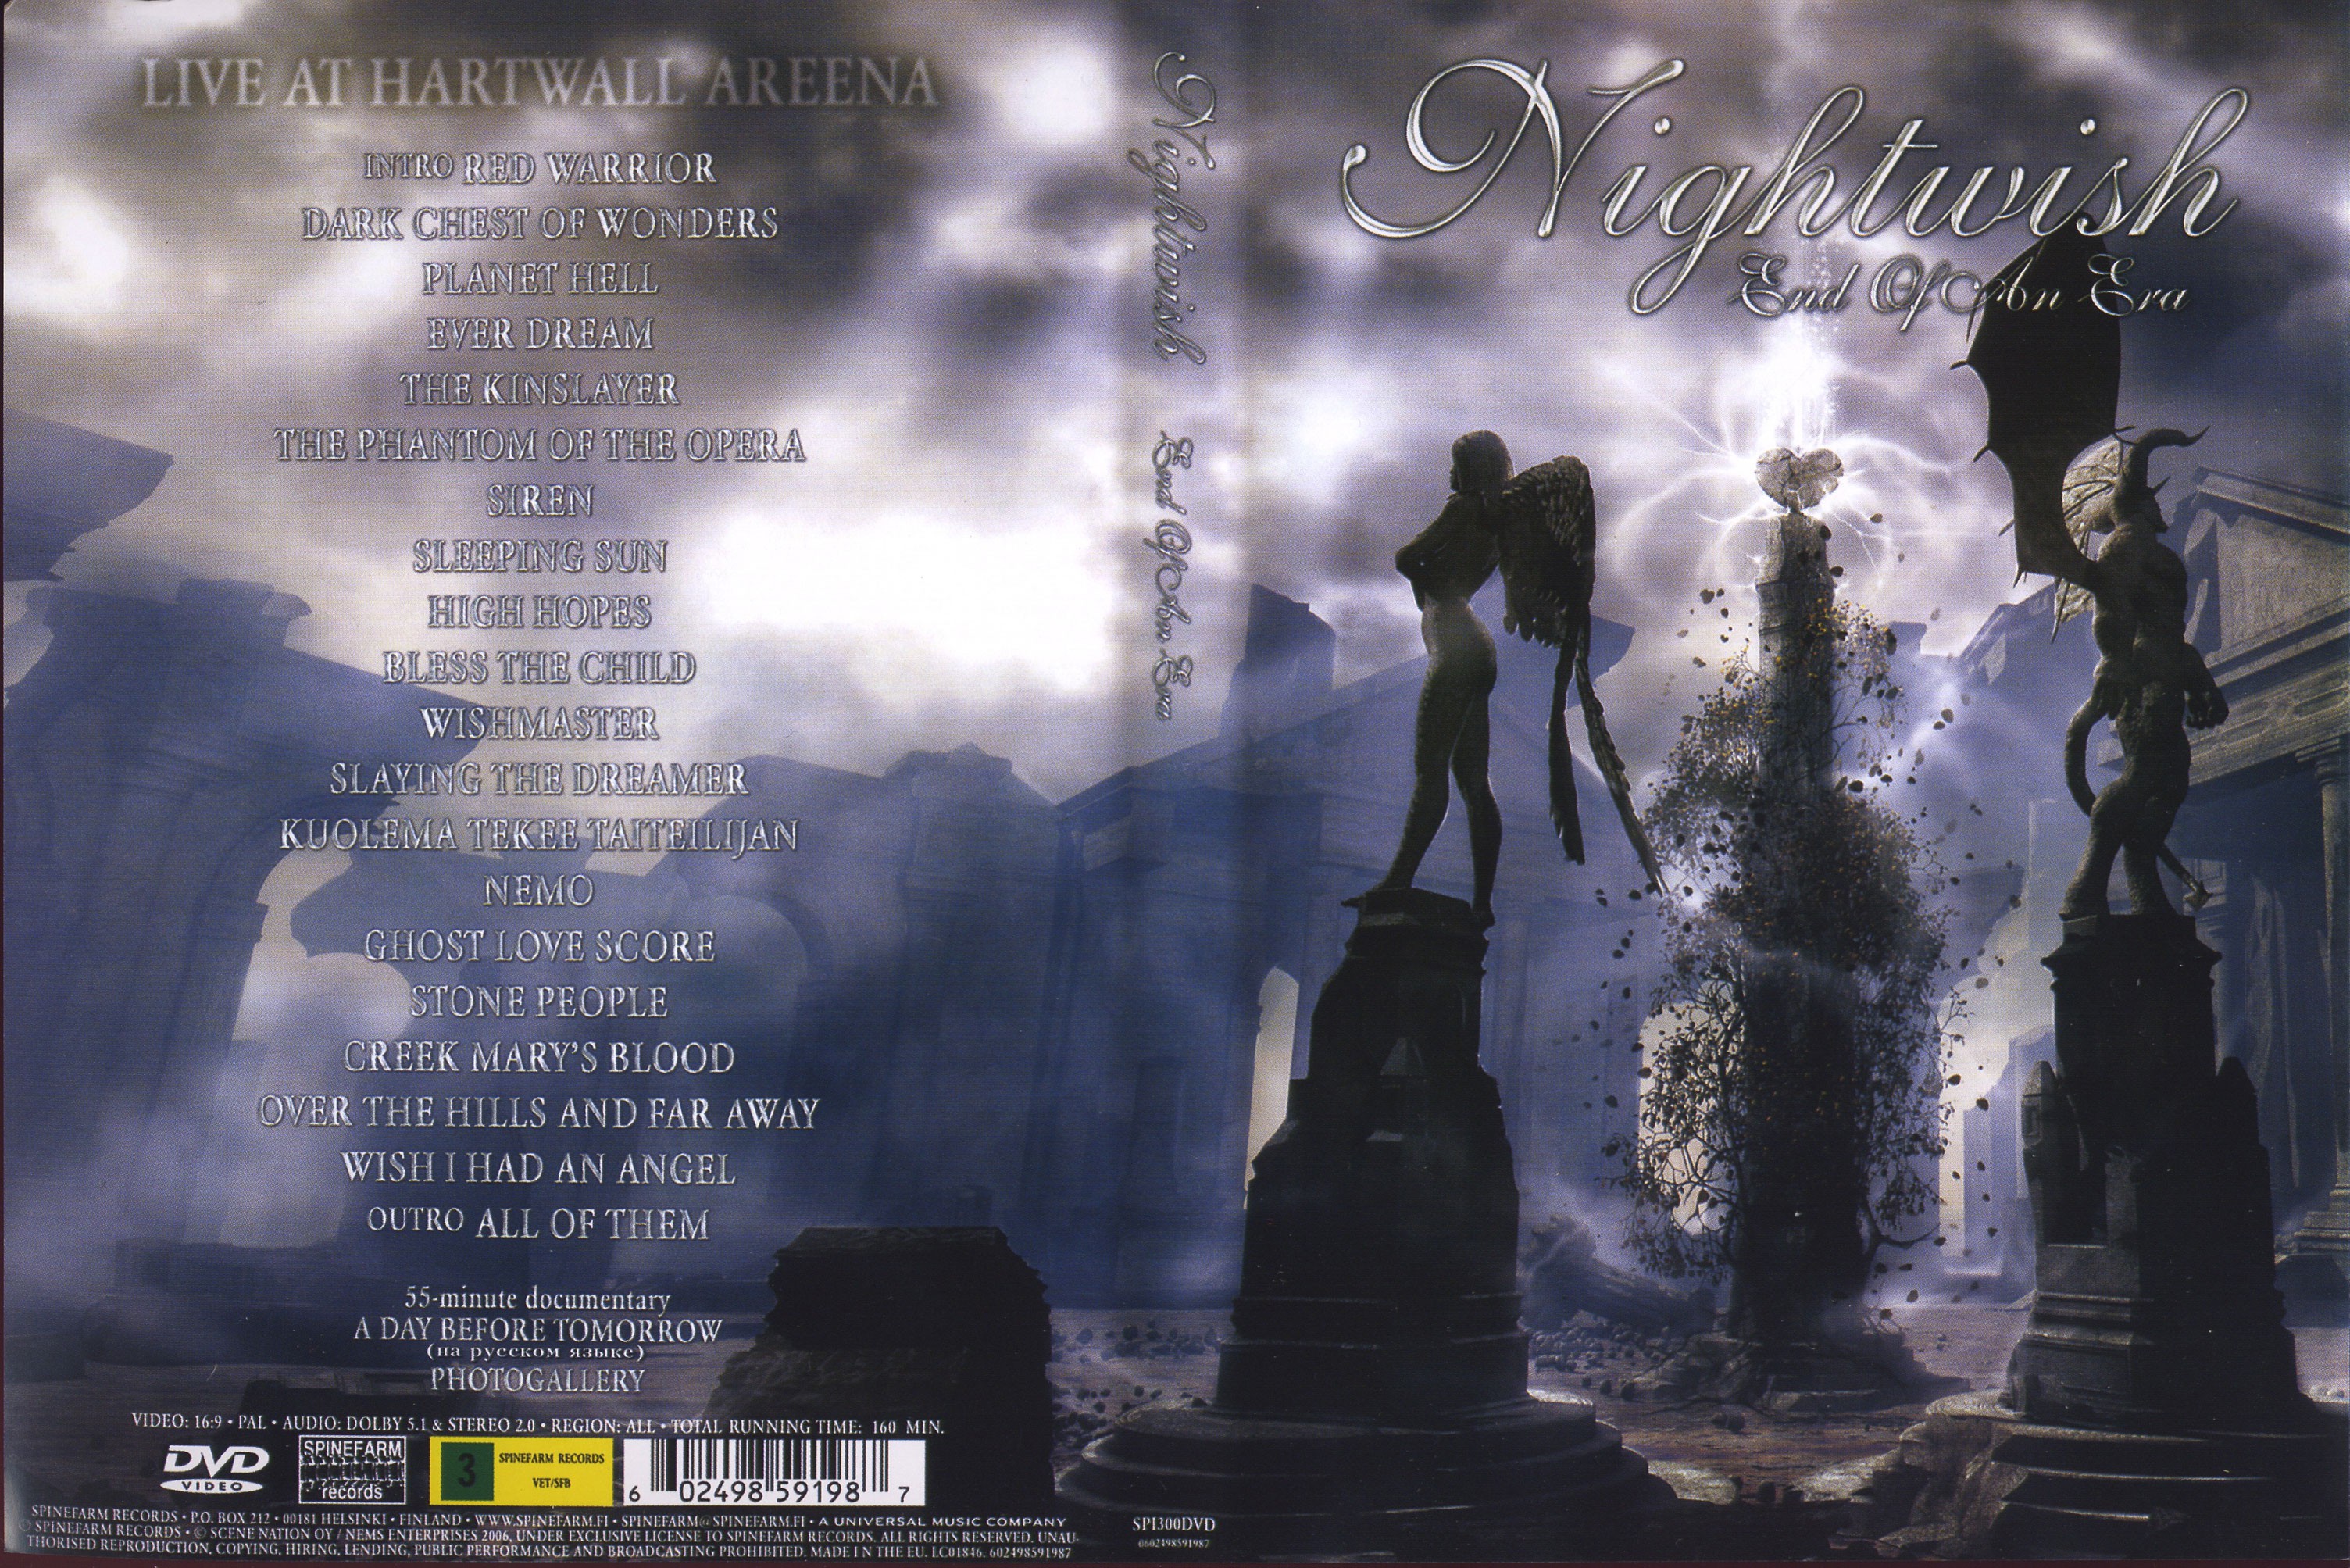 Hills and far away. Nightwish end of an era 2006. Концерт найтвиш 2006. DVD диск группы Nightwish end of an era. DVD диск группы Nightwish.